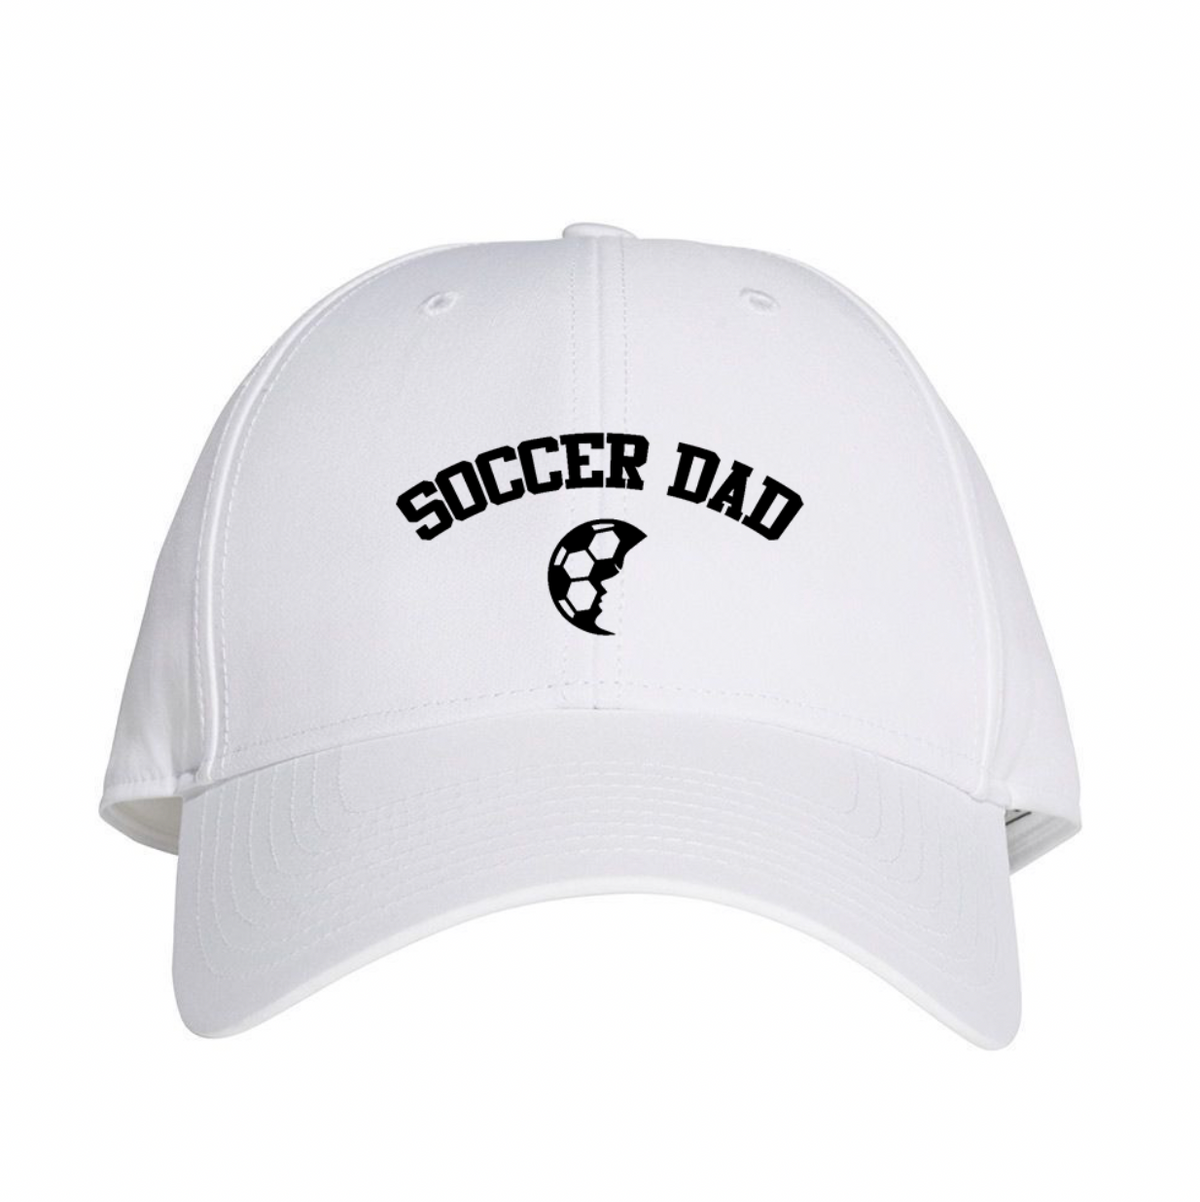 Soccer Dad Baseball Cap